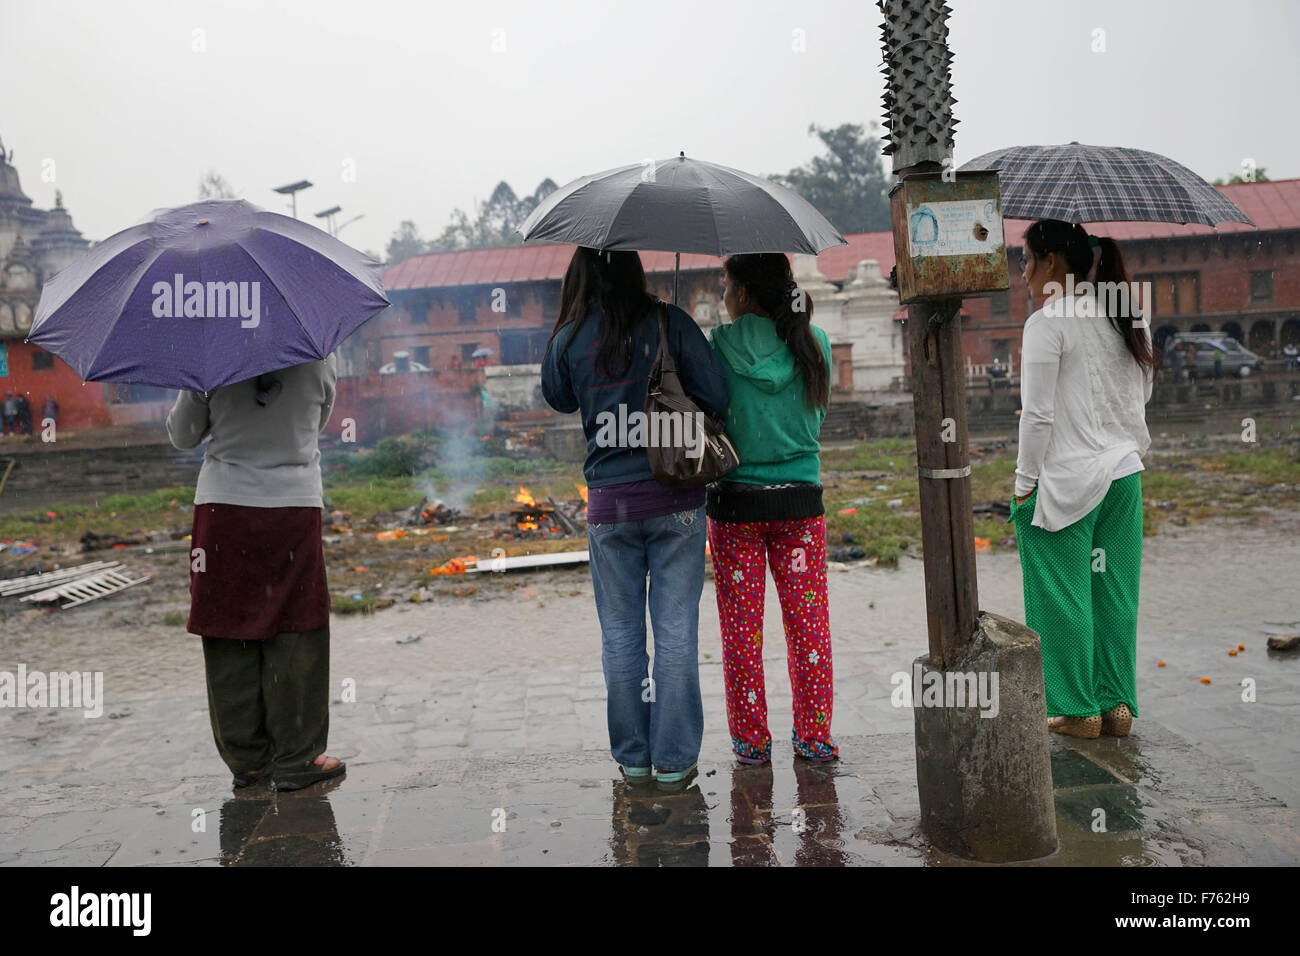 Women watching cremation with umbrellas in rain, earthquake deaths, kathmandu, nepal, asia Stock Photo